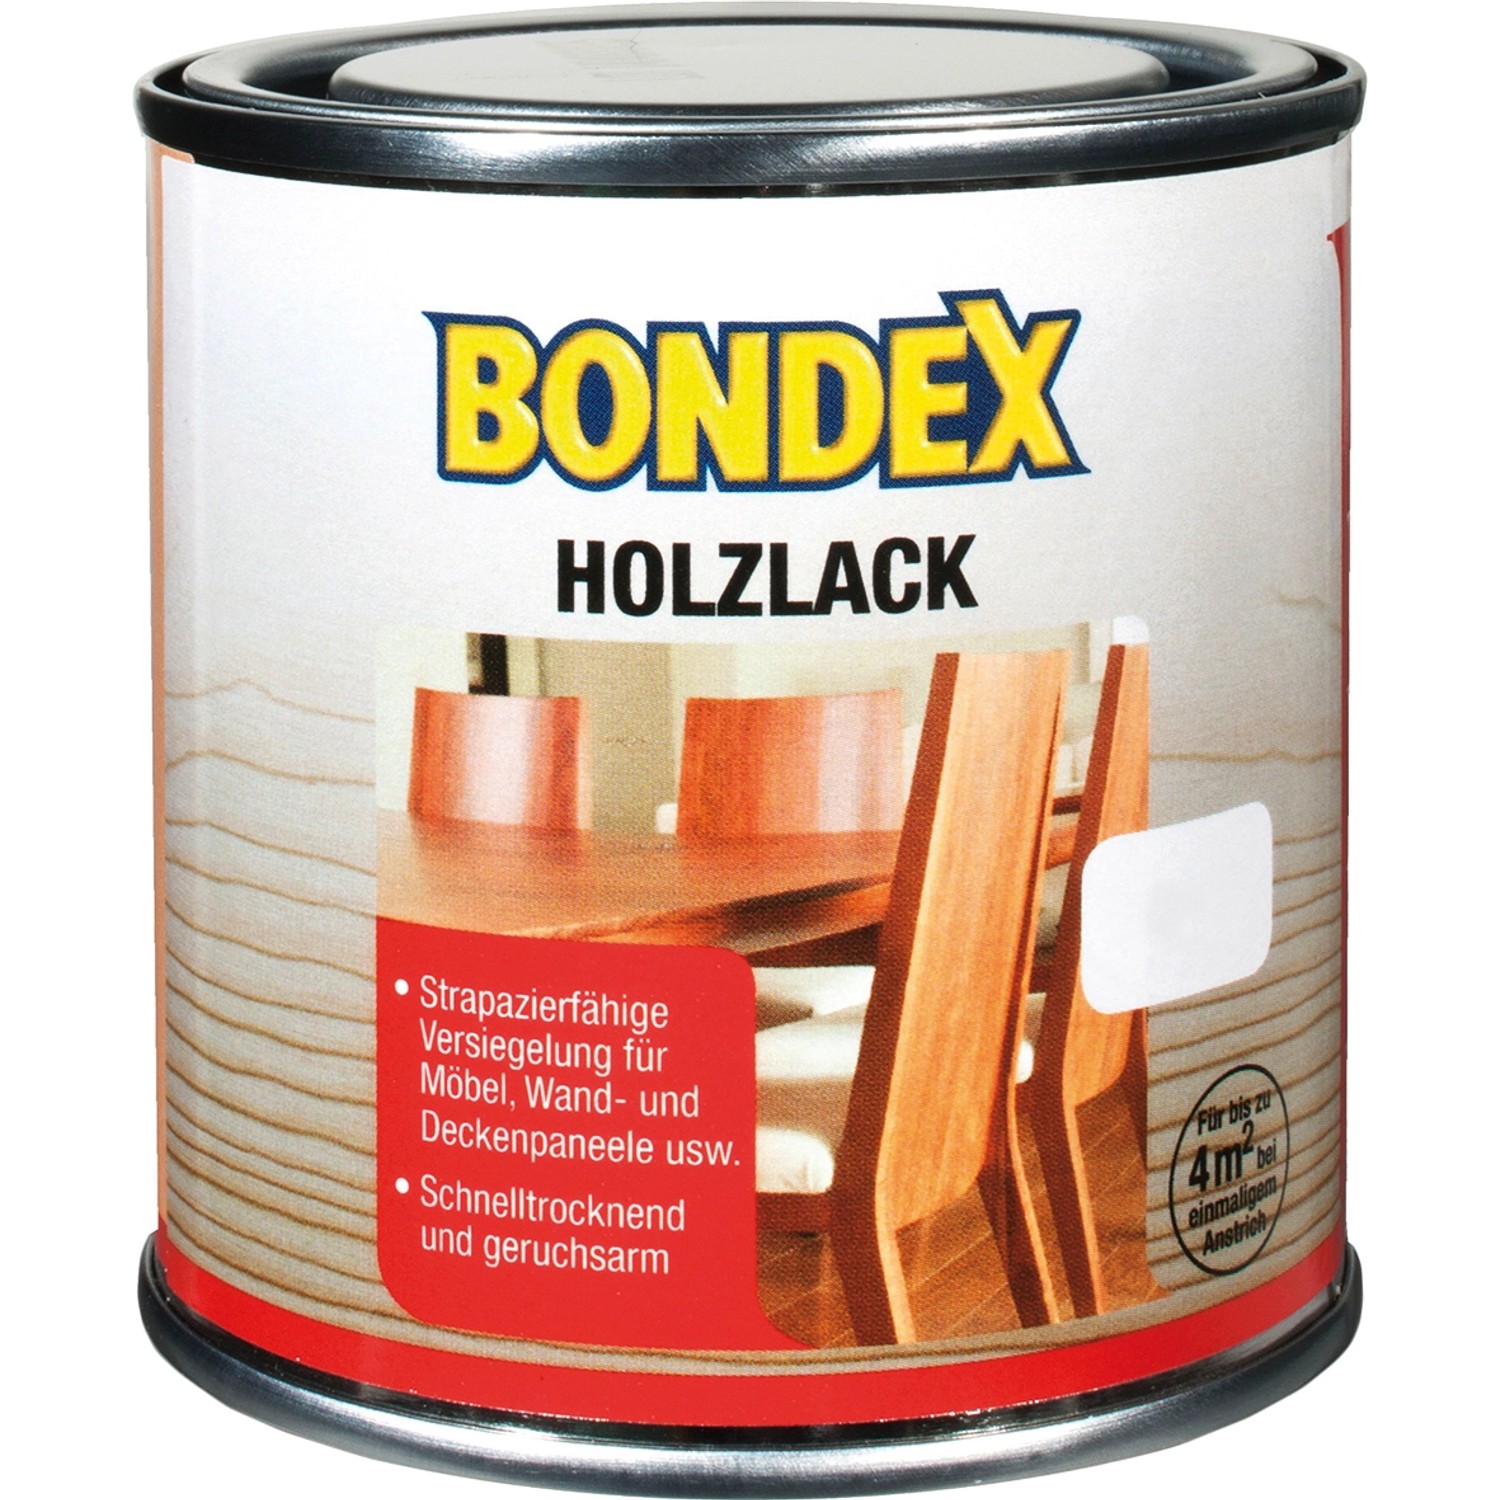 Bondex Holzlack Transparent glänzend 250 ml von Bondex